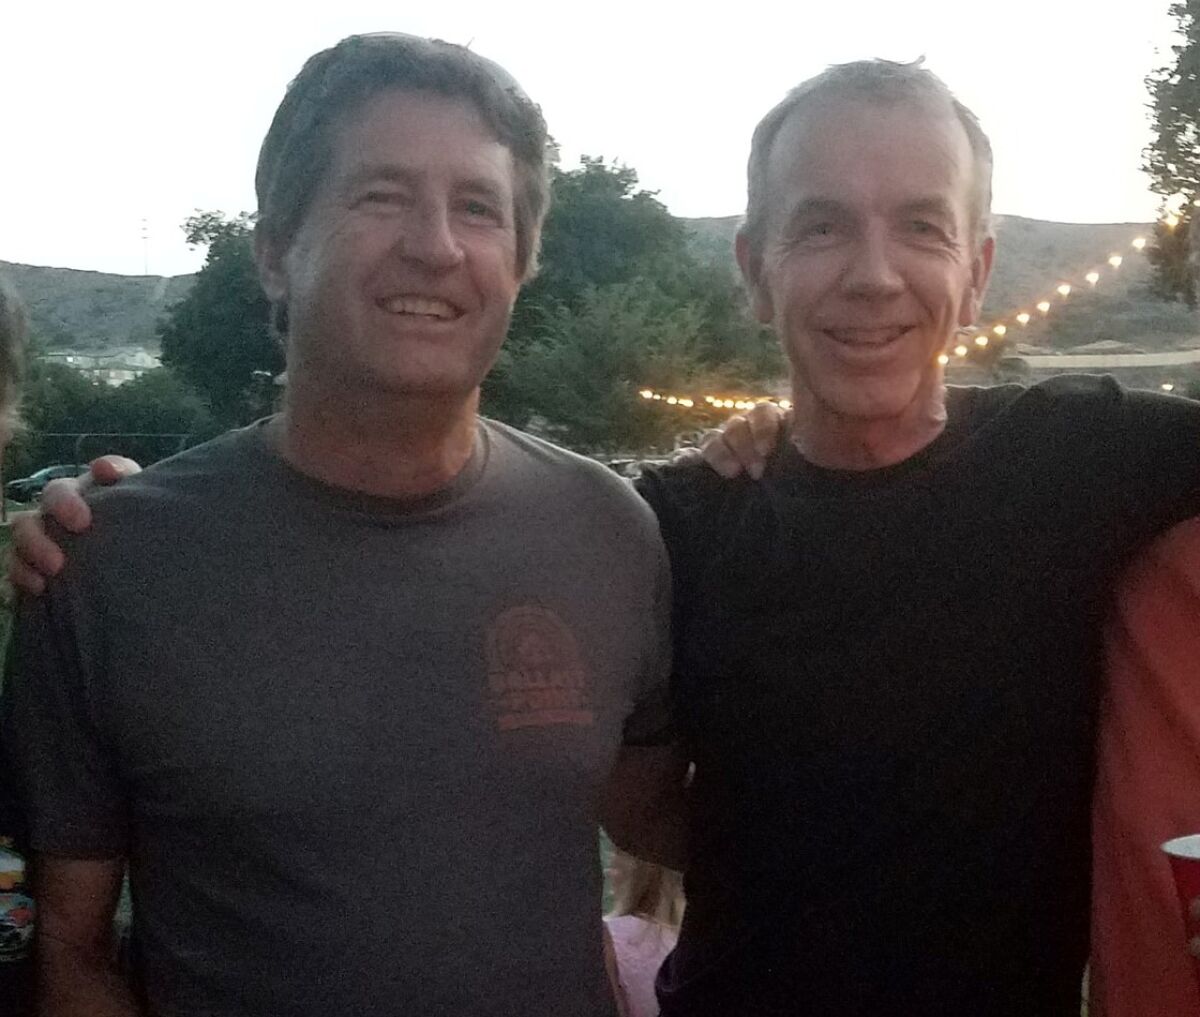 HomeFed's Jeff O'Connor (left) and Preserve Wild Santee's Van Collinsworth in 2018